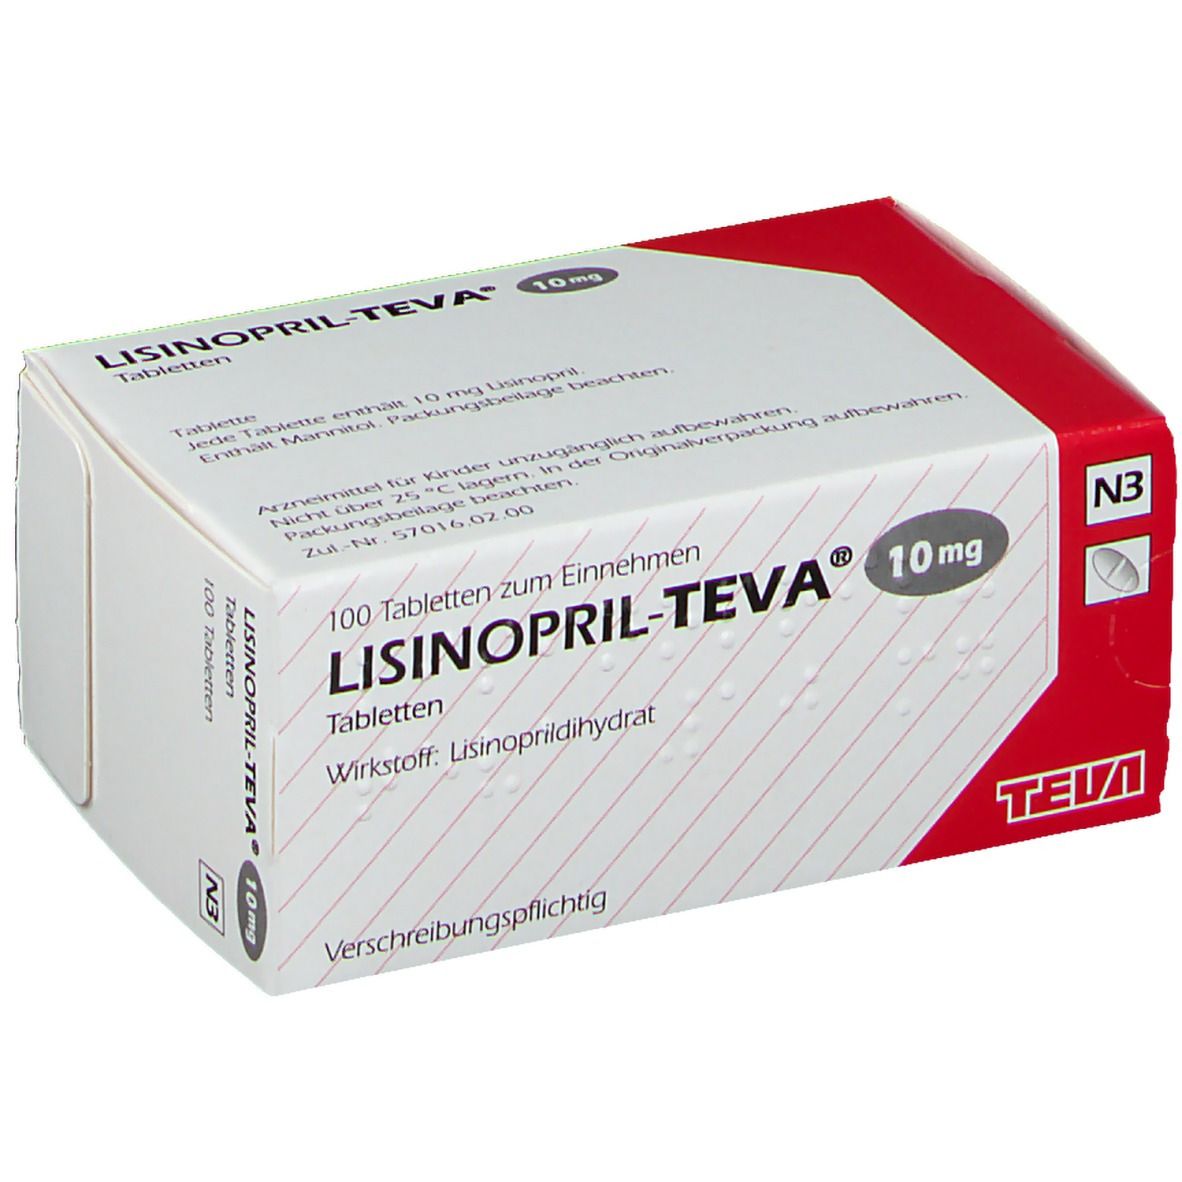 LISINOPRIL-TEVA® 10 mg